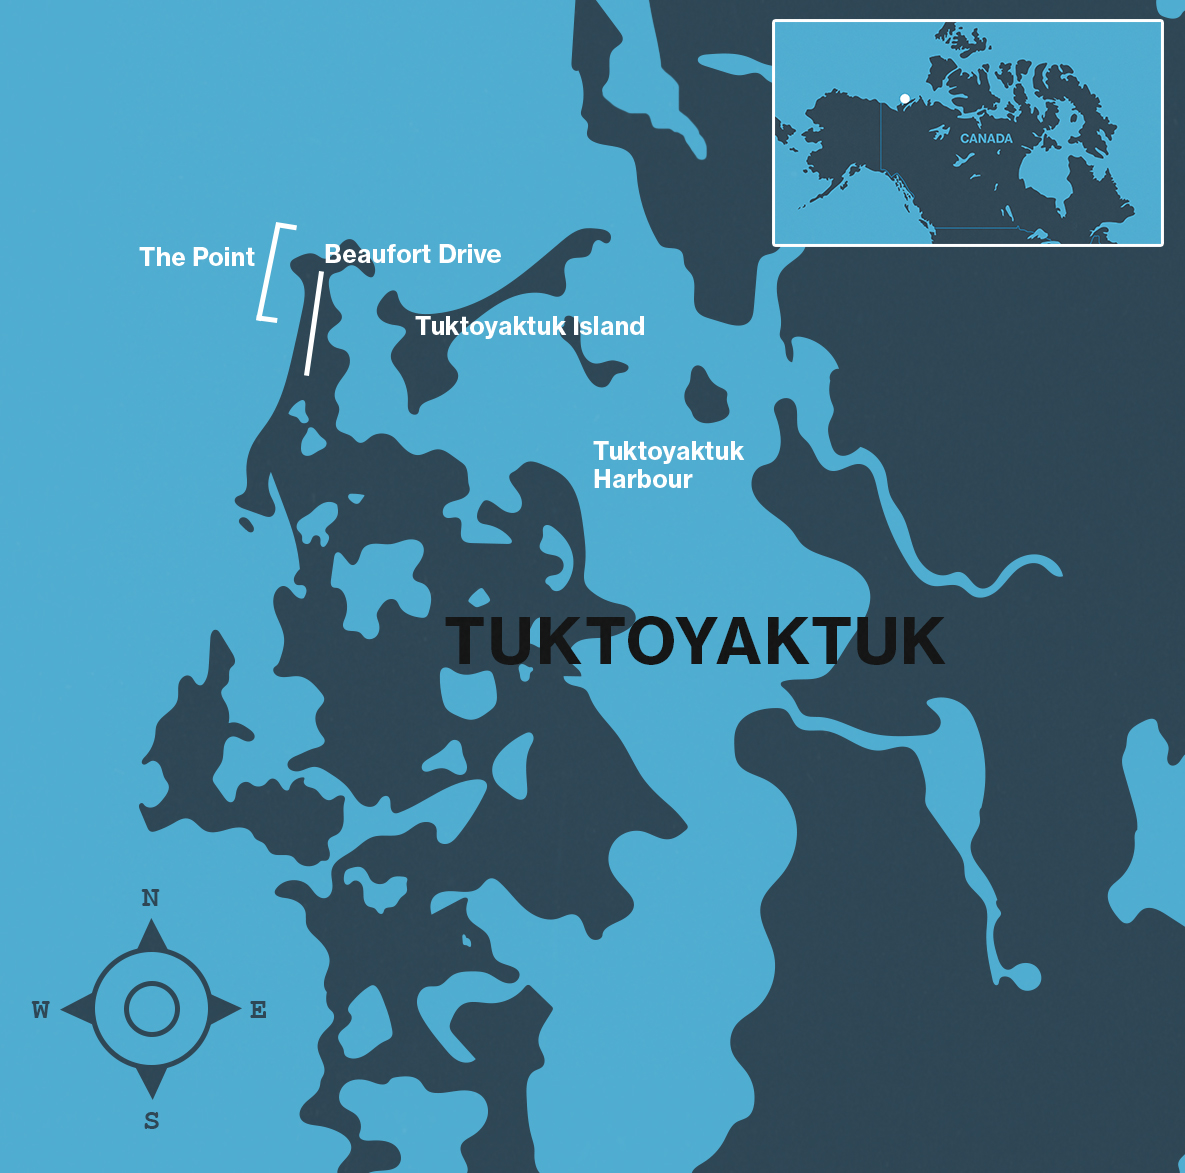 Map of Tuktoyaktuk by Hunter French.